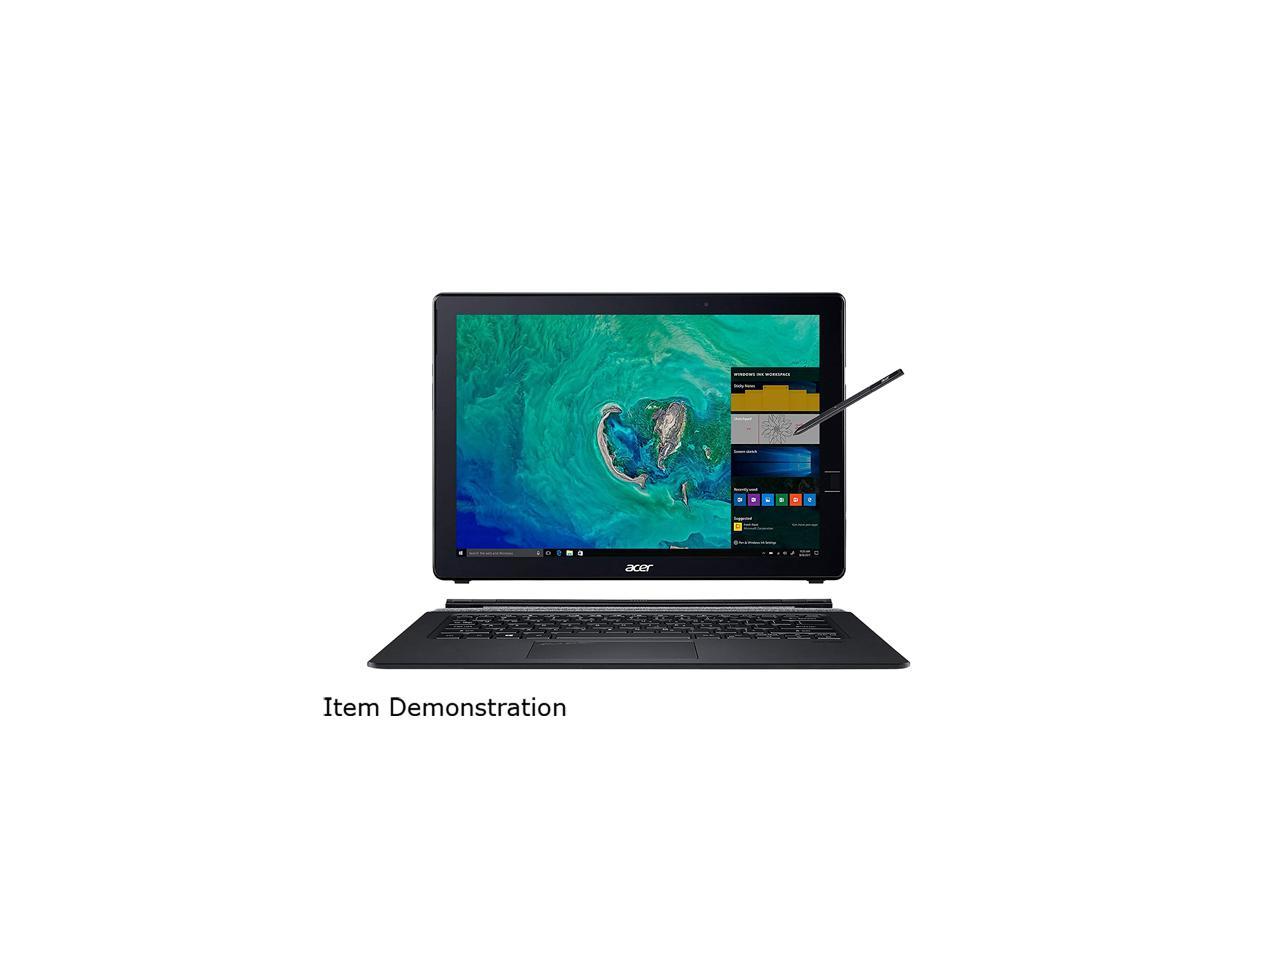 Acer Switch 7 Black Edition SW713-51GNP-879G Intel Core i7 8th Gen 8550U (1.80 GHz) 16 GB LPDDR3 Memory 512 GB SSD NVIDIA GeForce MX150 13.5" Touchscreen 2256 x 1504 Detachable 2-in-1 Laptop with Stylus Windows 10 Pro 64-Bit